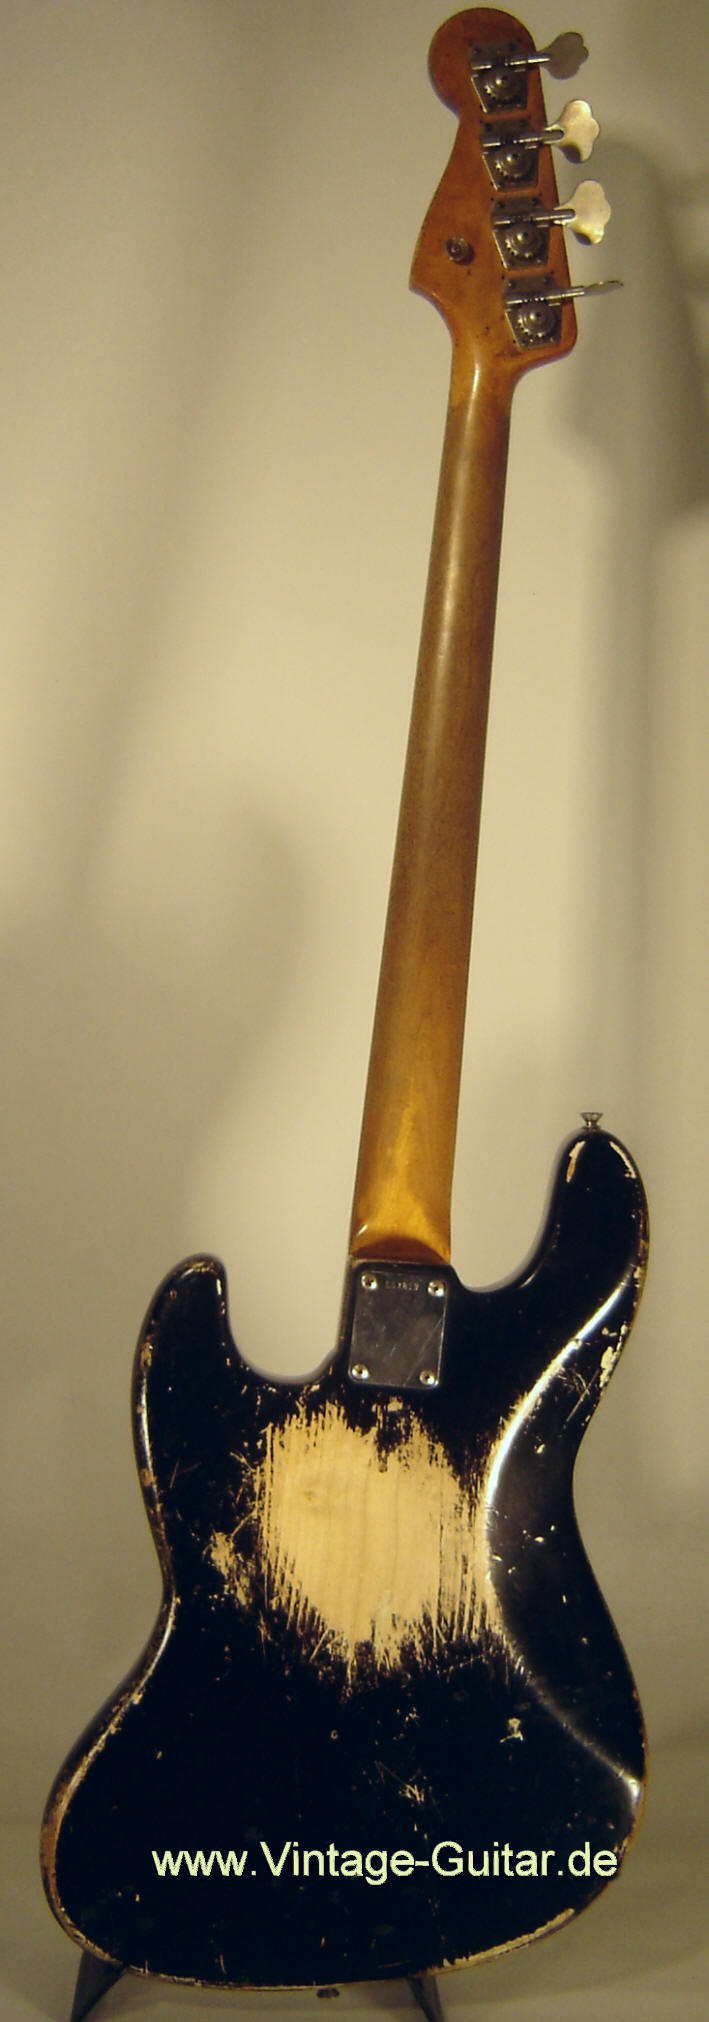 Fender-Jazz-Bass-1963-black-2.jpg